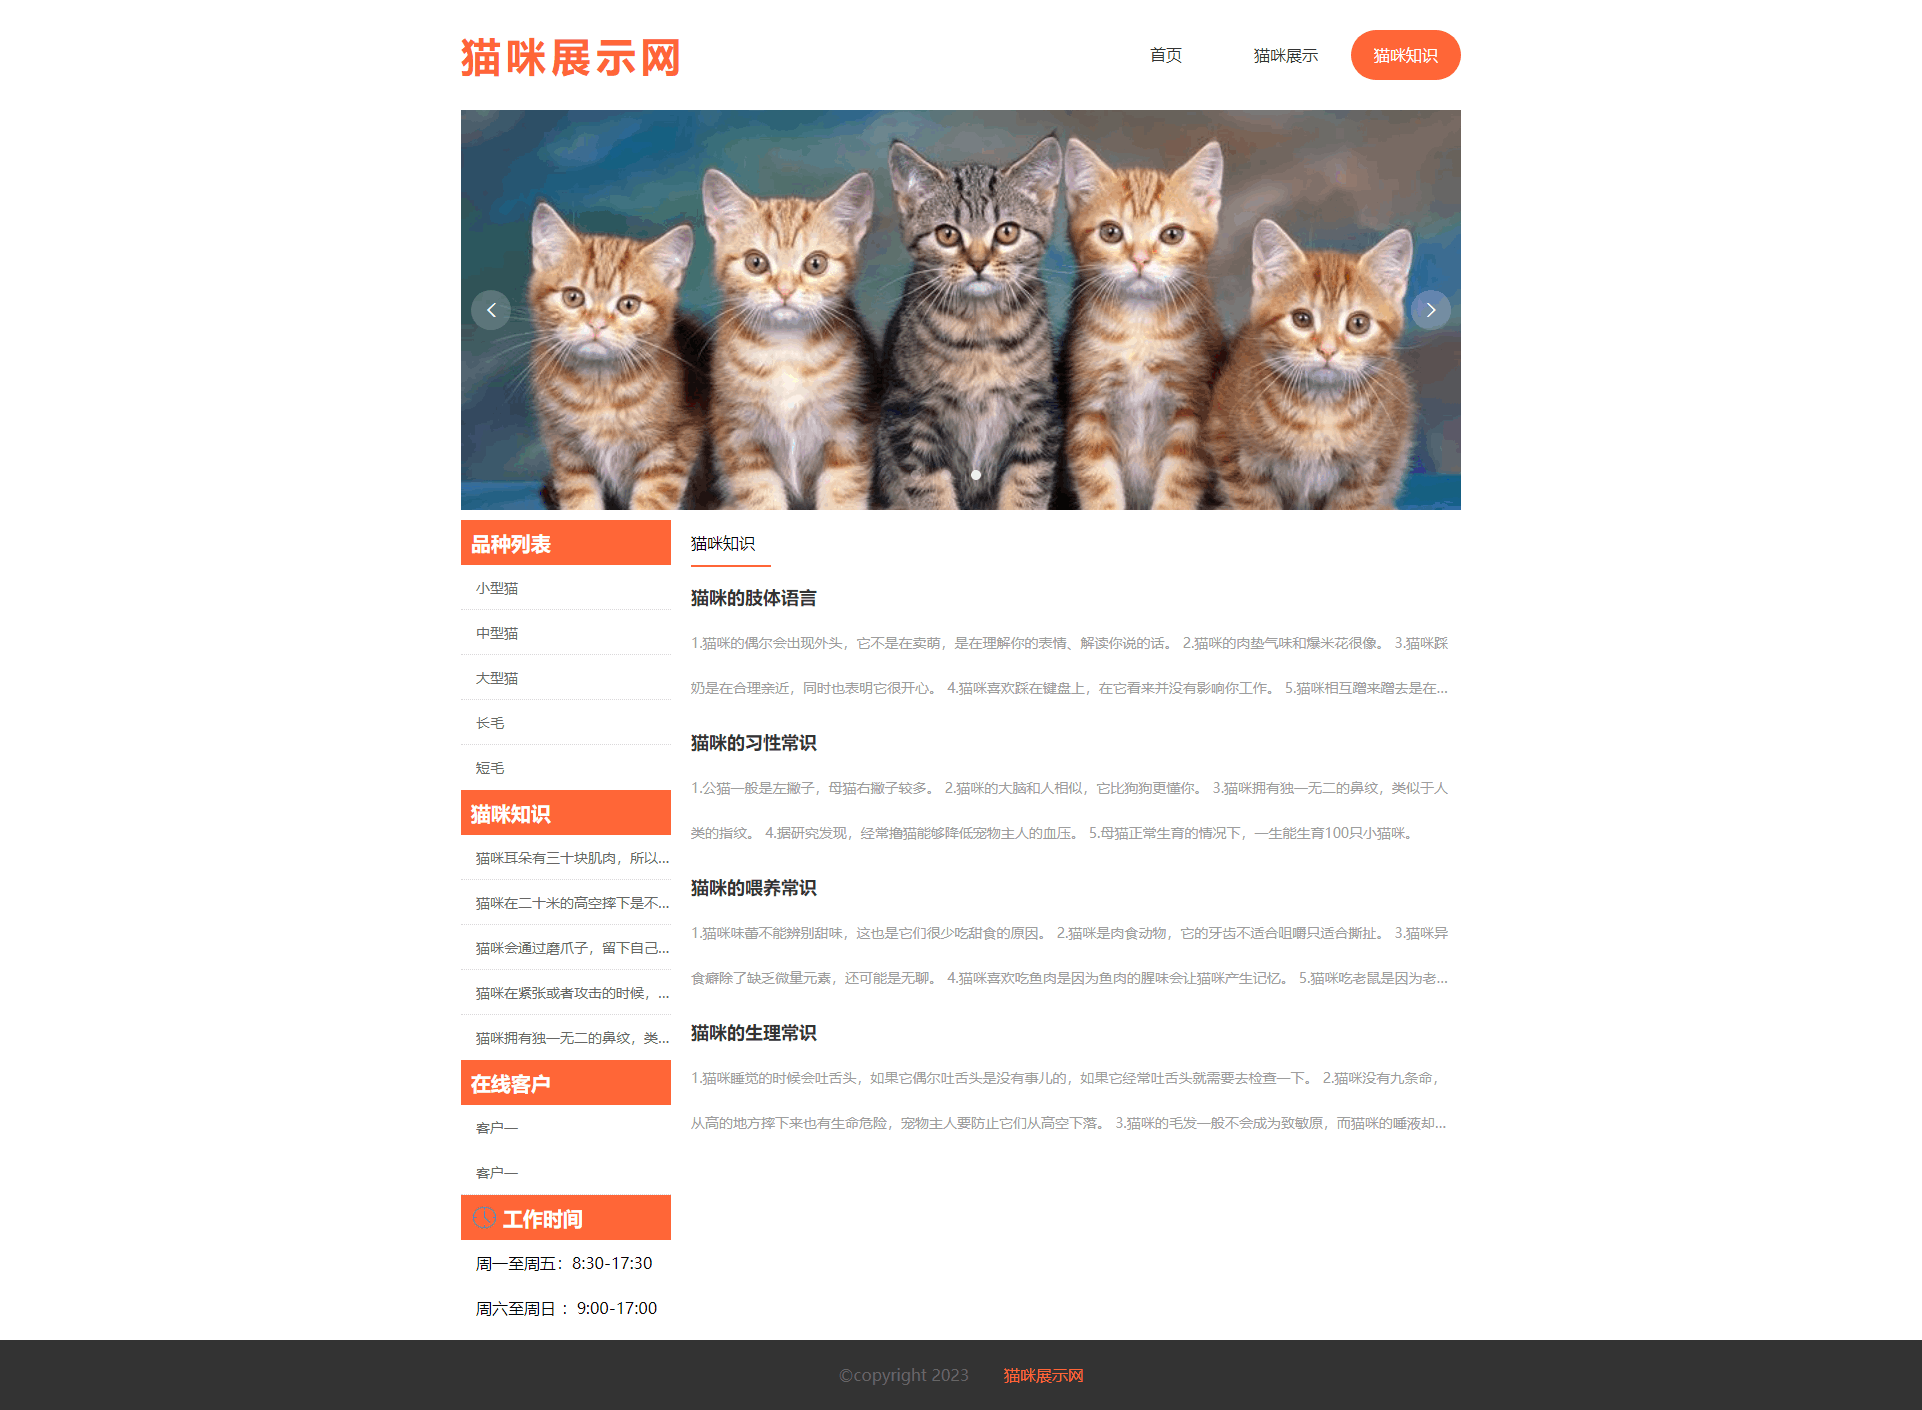 【html+css+javascript】动物3页 猫咪展示网  带js轮播图